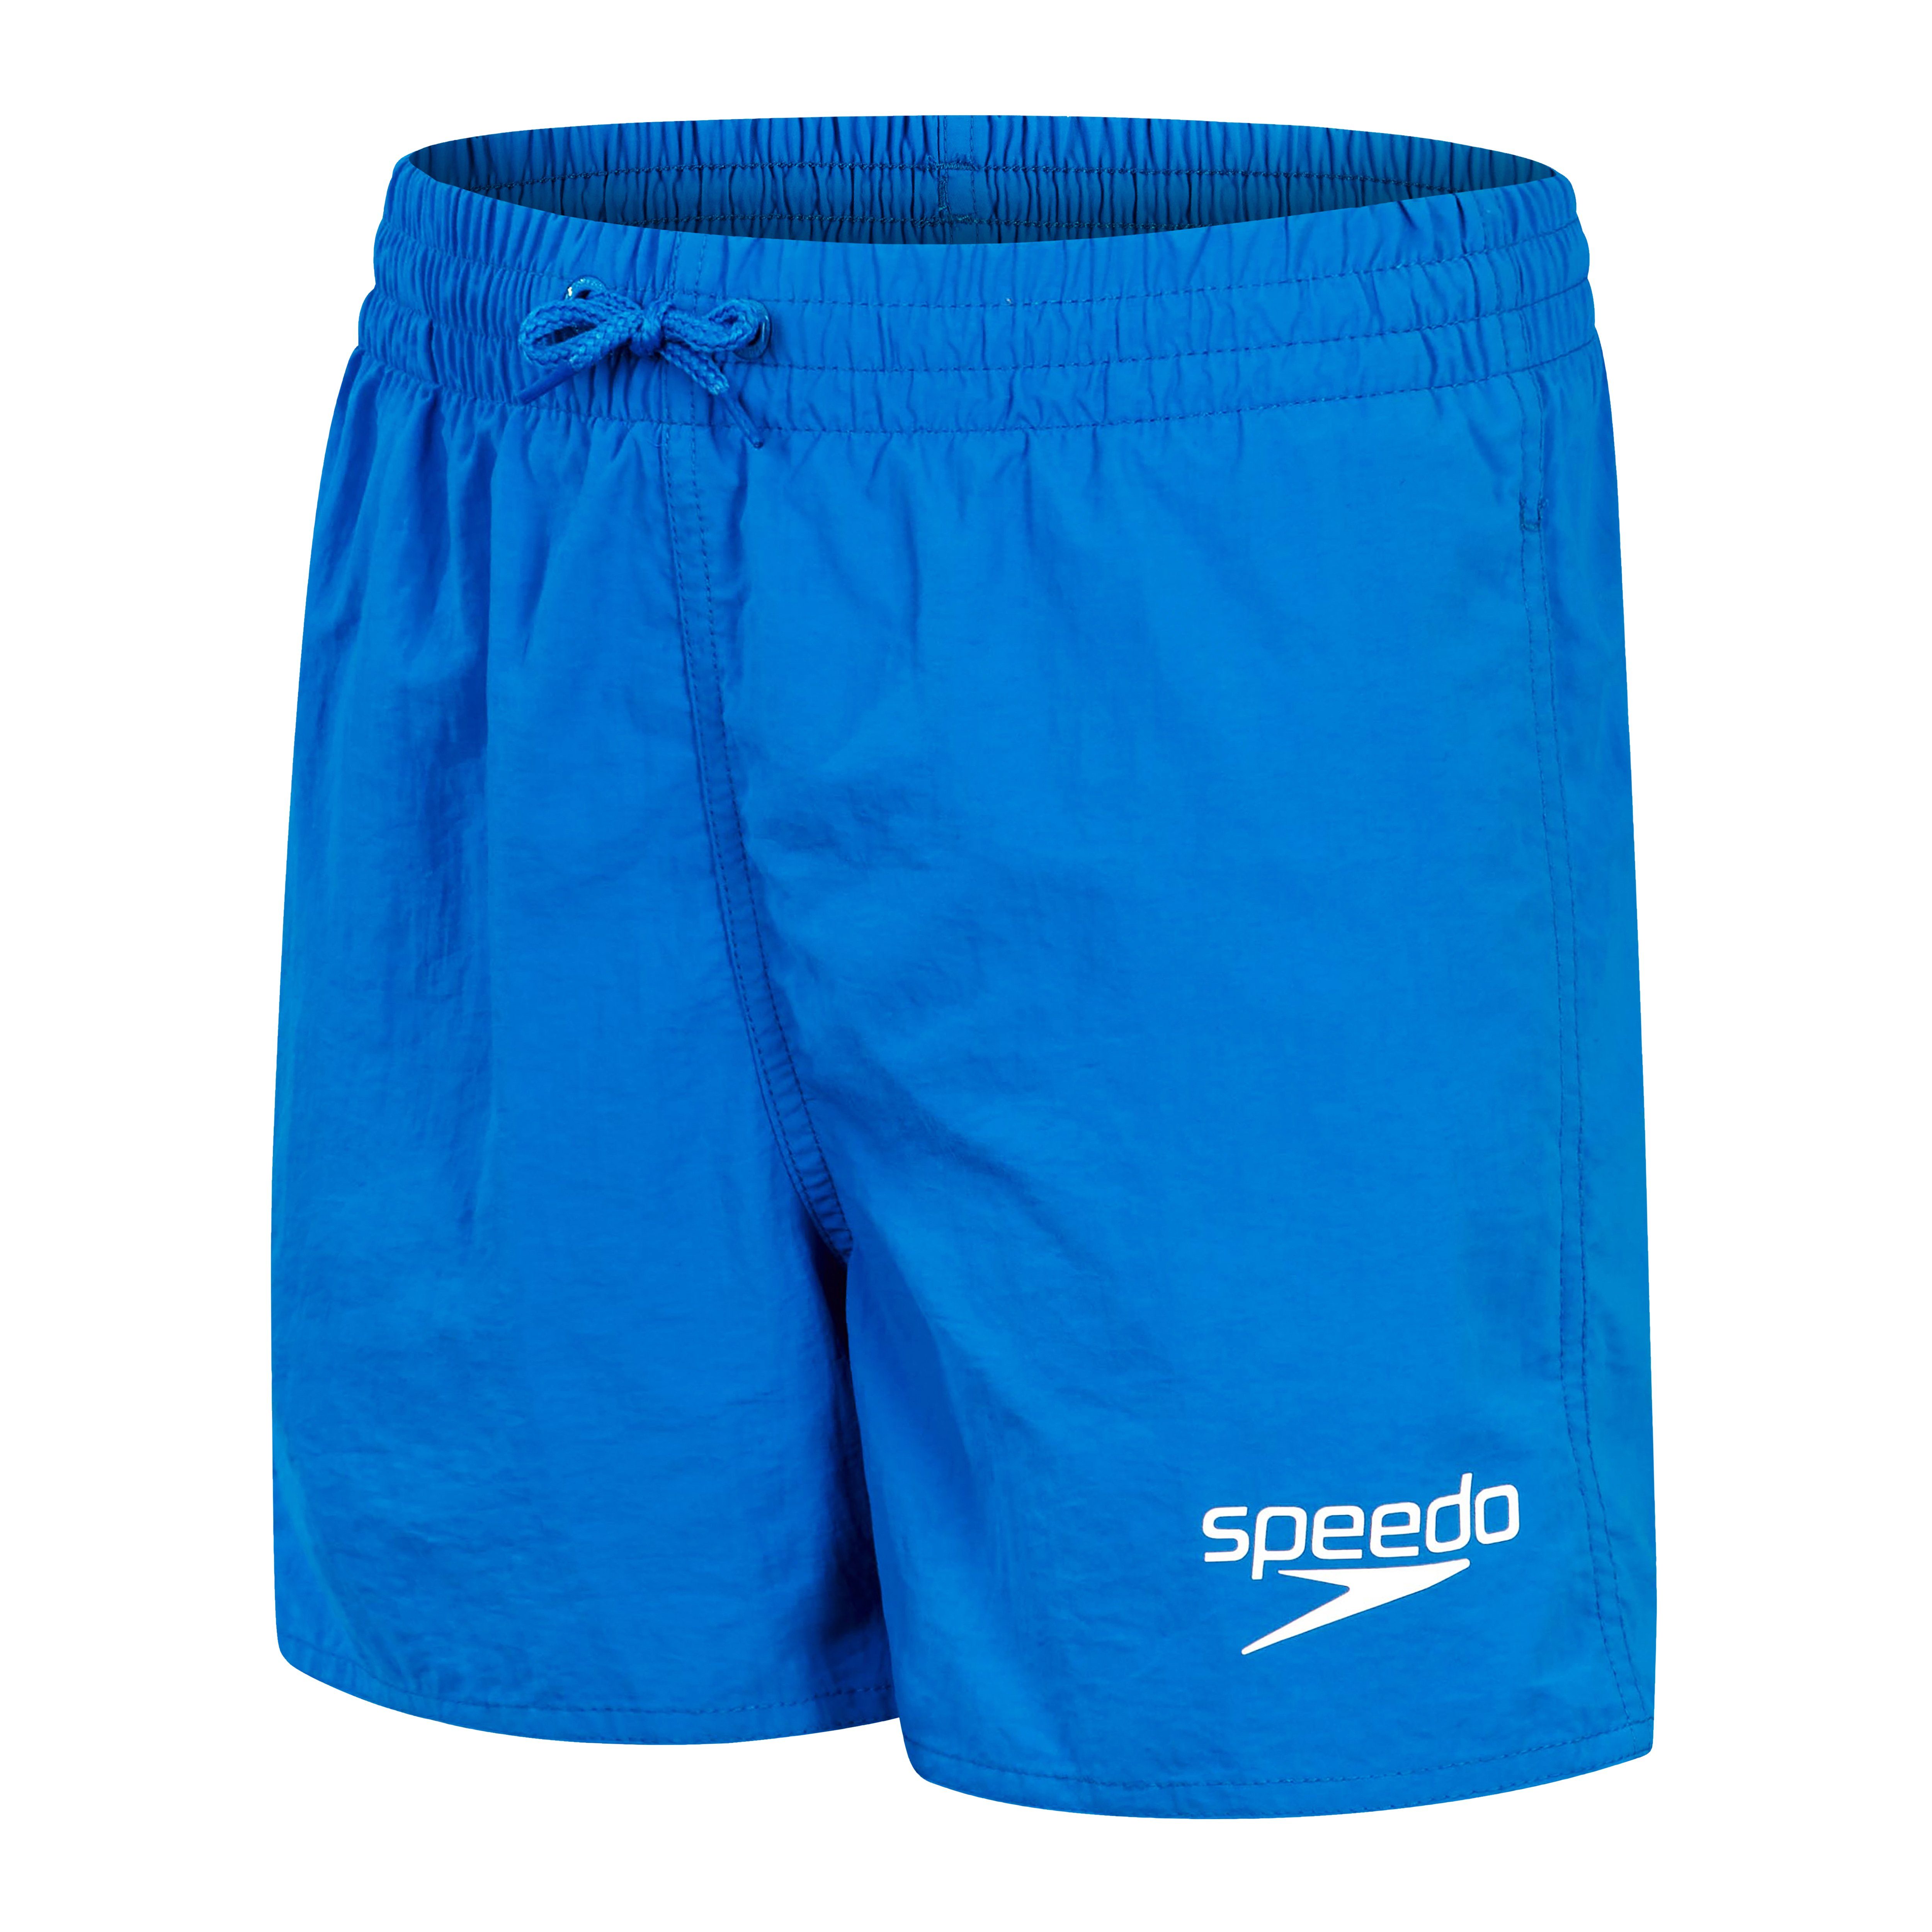 Speedo Badeshorts Kinder Bade-Shorts John Verstellbare Passform blau | Badeshorts